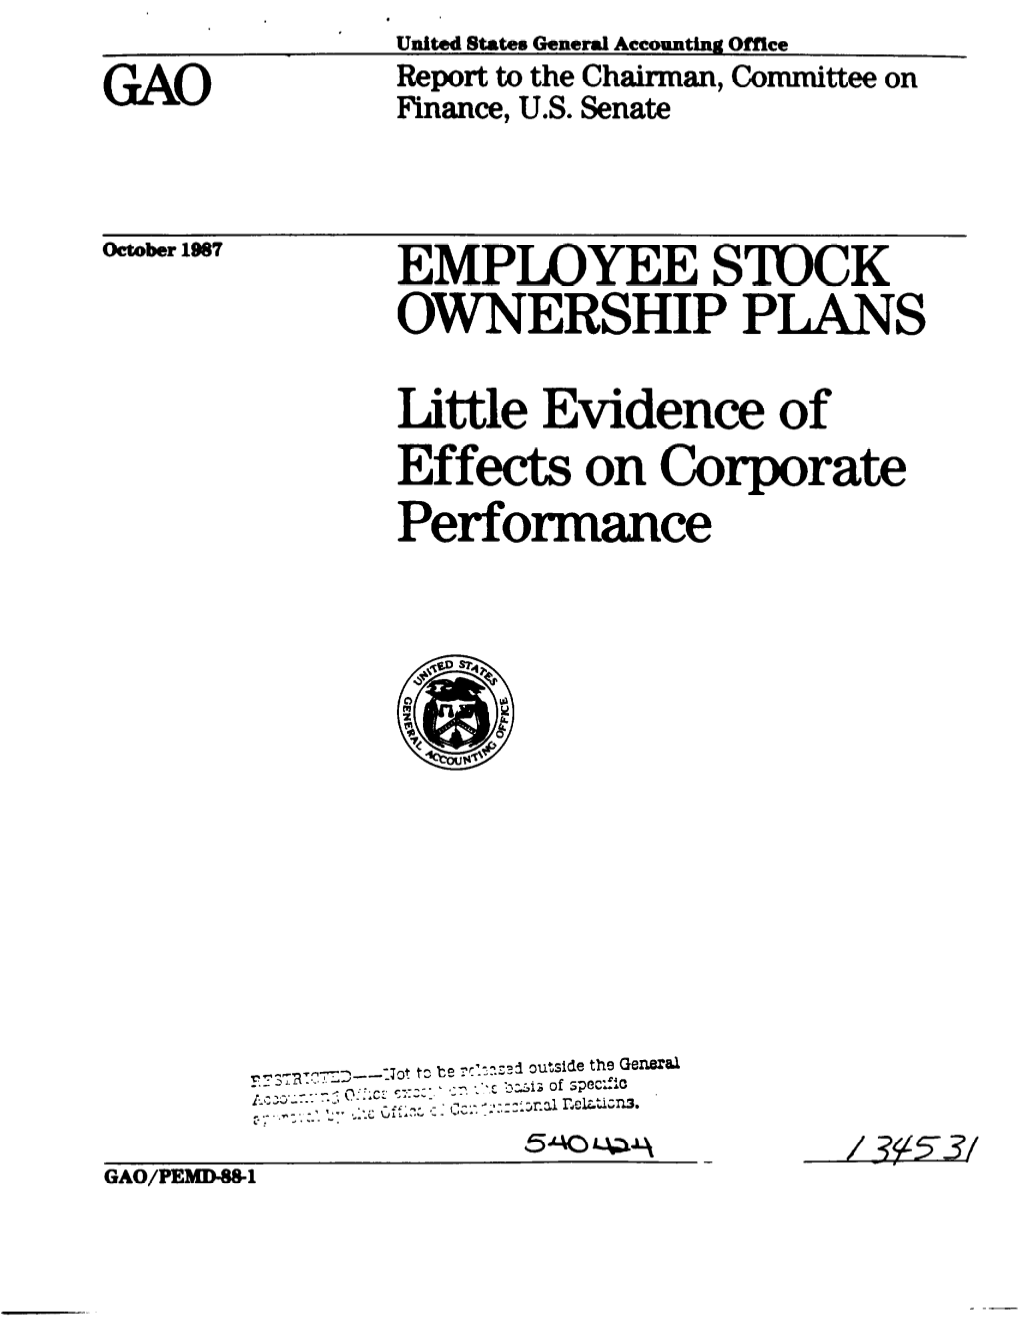 PEMD-88-1 Employee Stock Ownership Plans